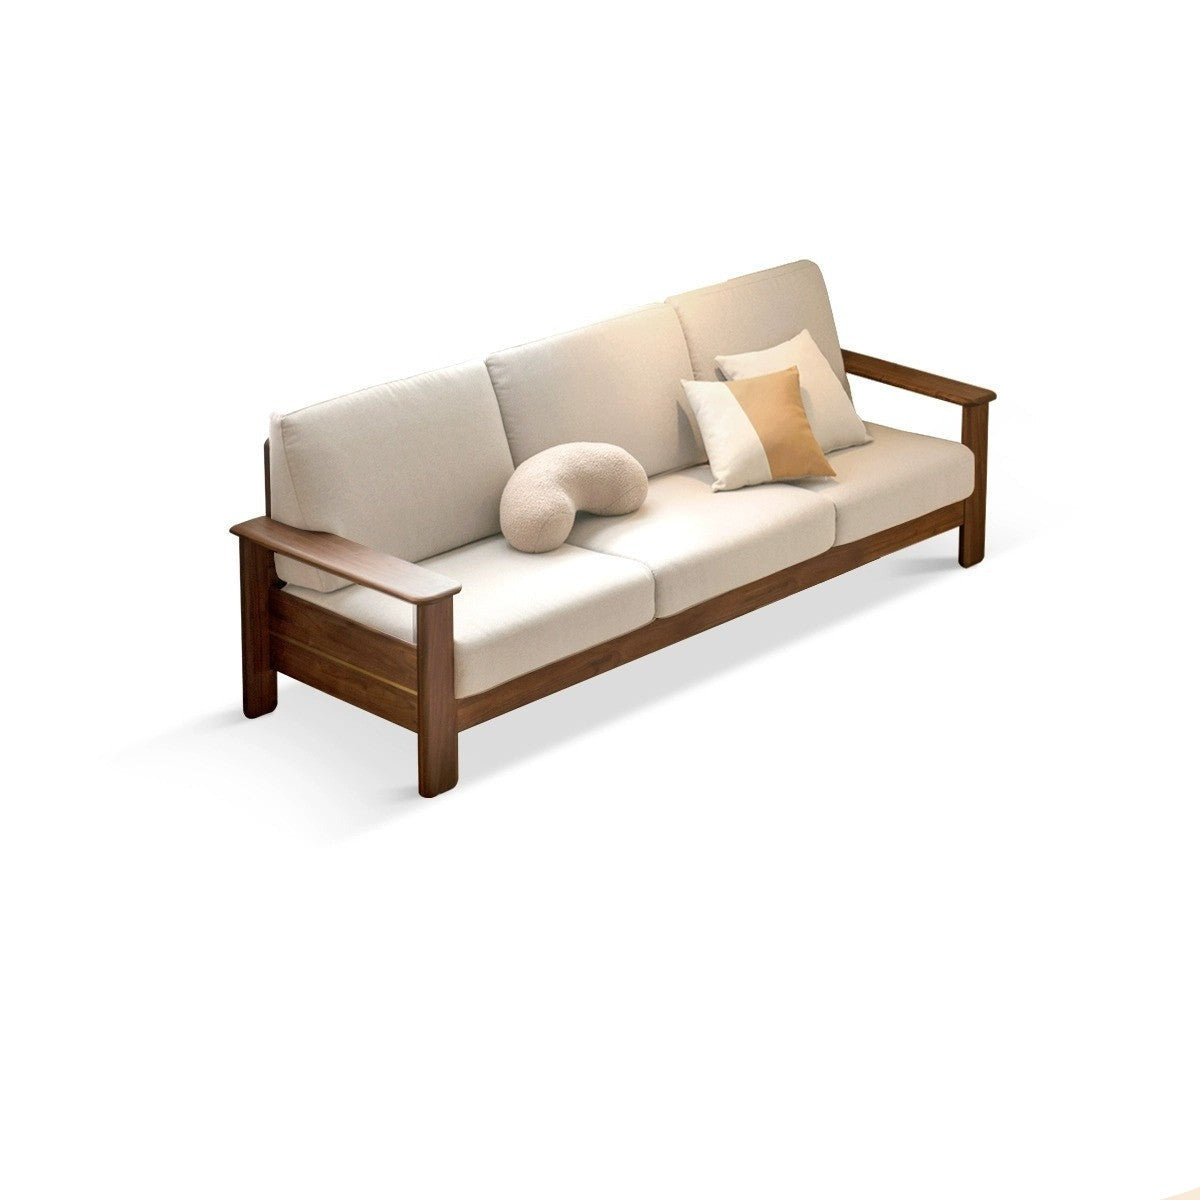 Black walnut solid wood Nordic large-sized high-back sofa"